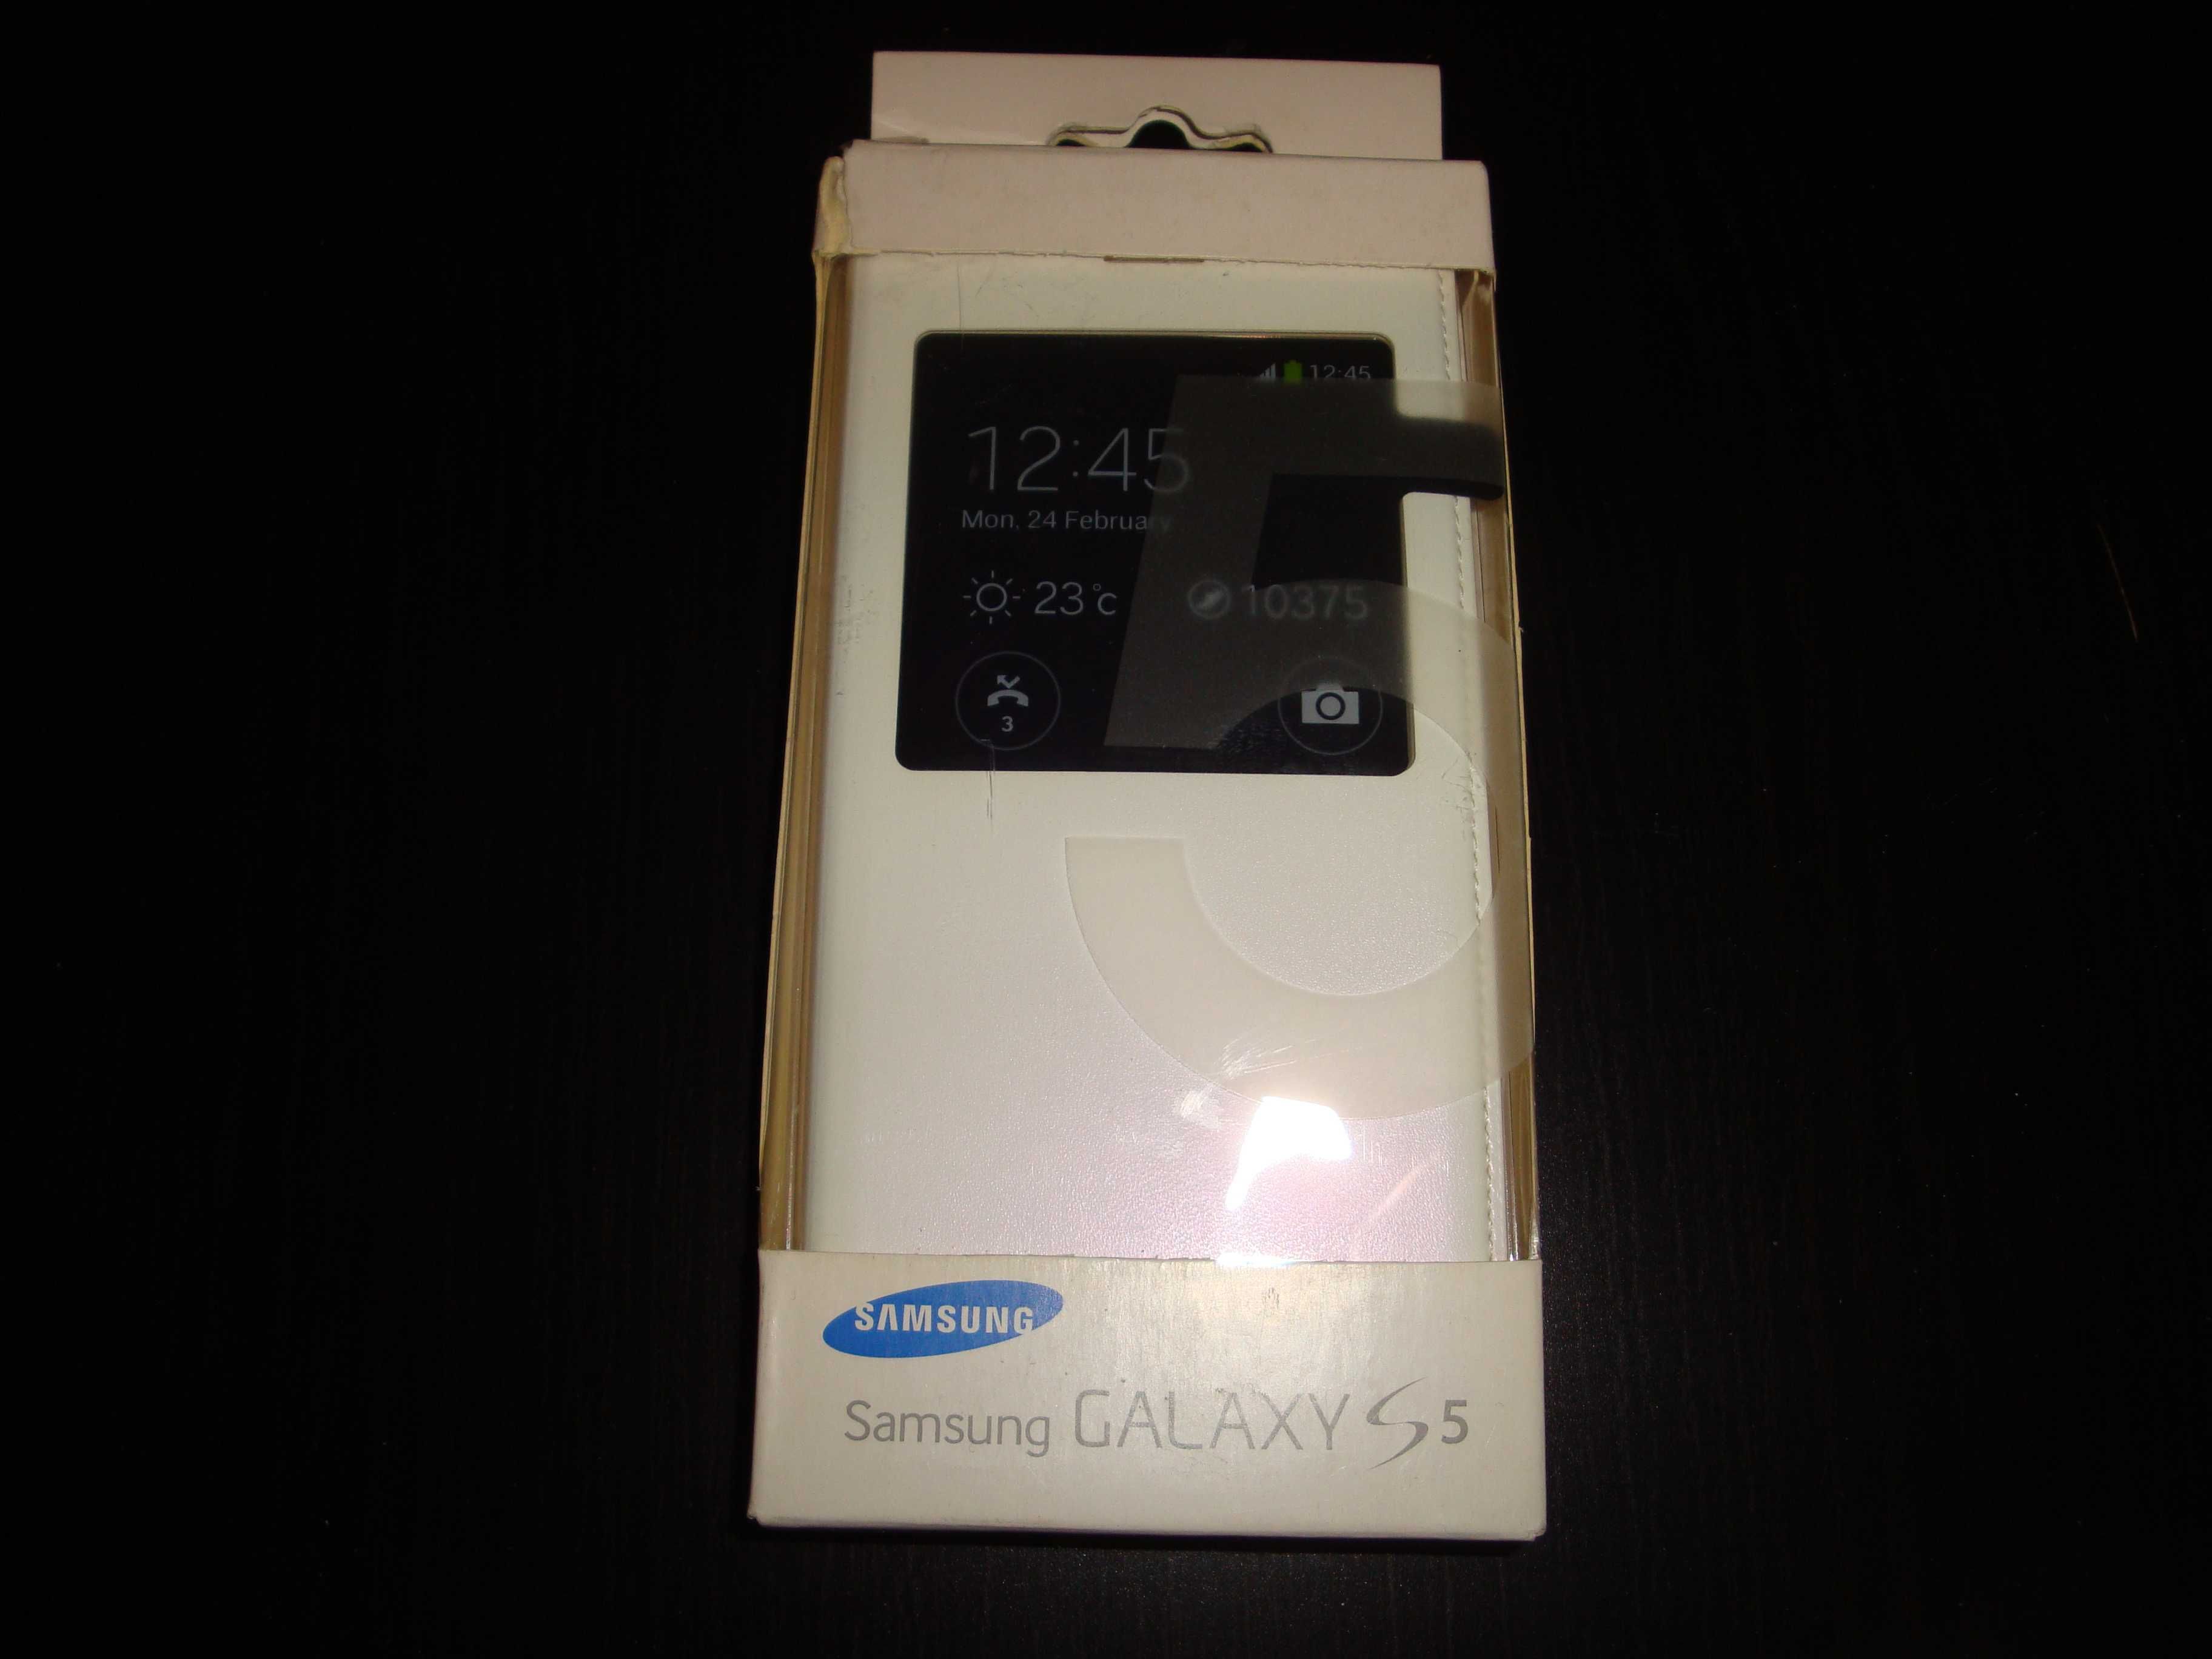 Be excited Lunar New Year Stare Husa originala Samsung Galaxy S5 G900F s-view alb perla Timisoara • OLX.ro